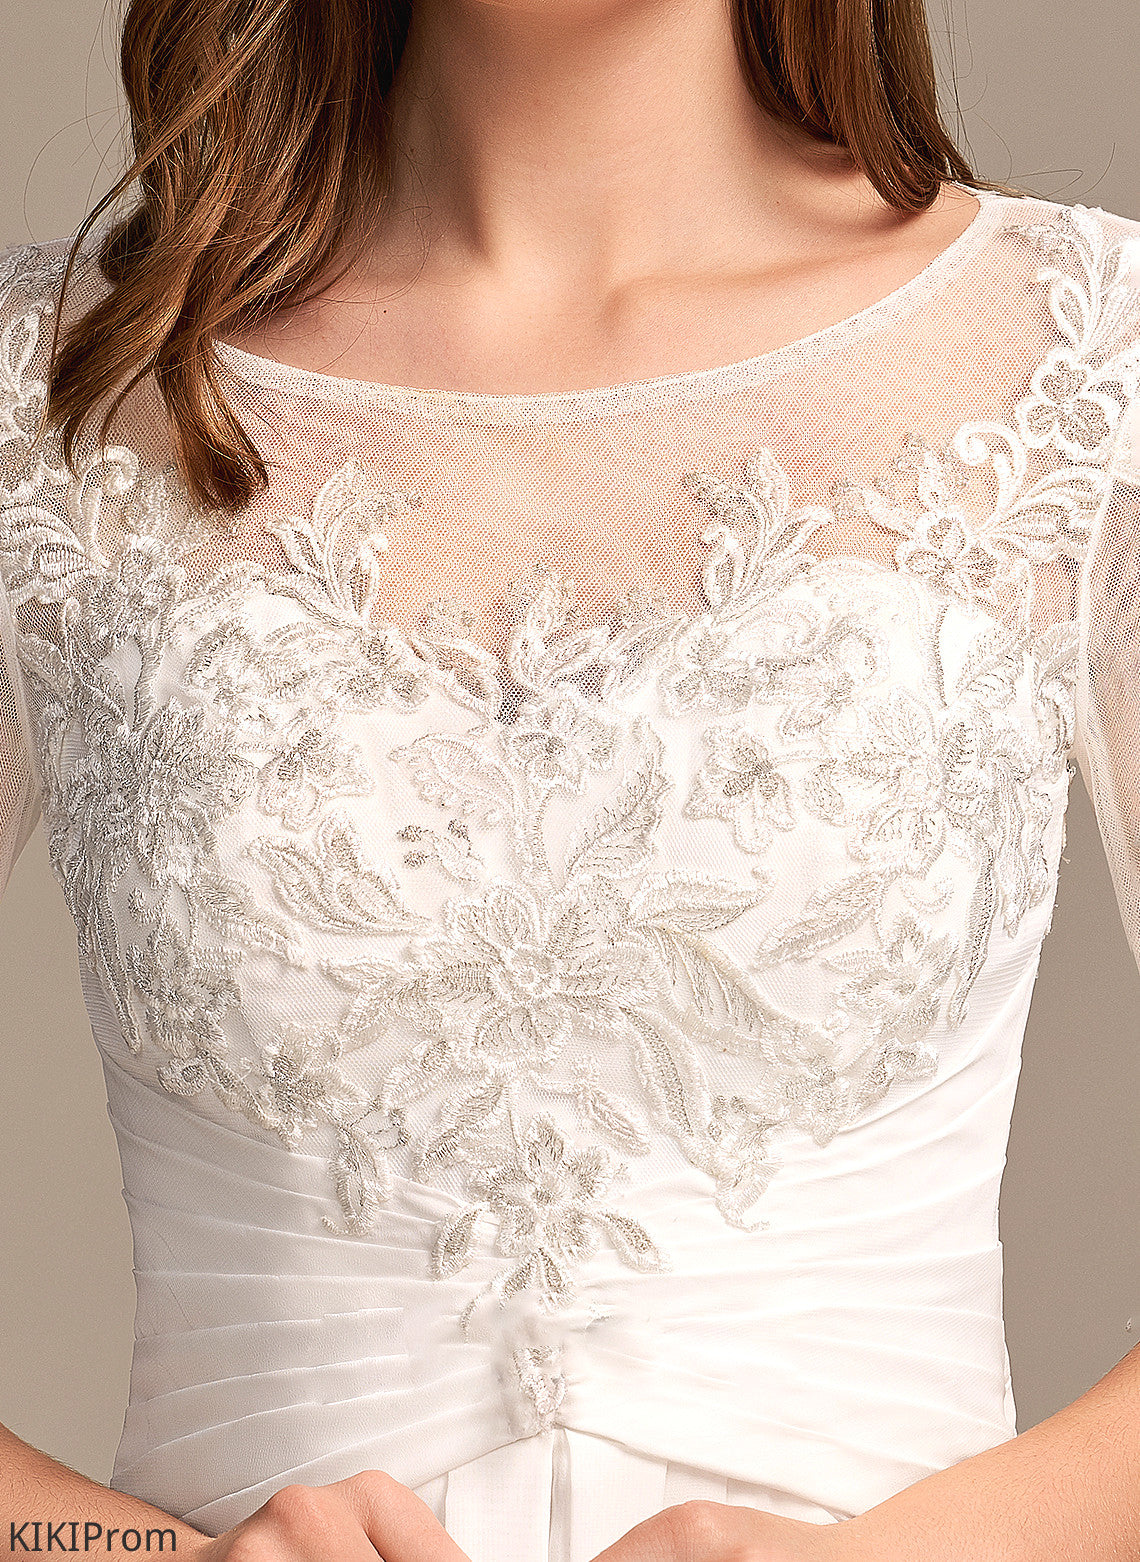 Illusion A-Line Dress Asymmetrical With Wedding Jada Wedding Dresses Lace